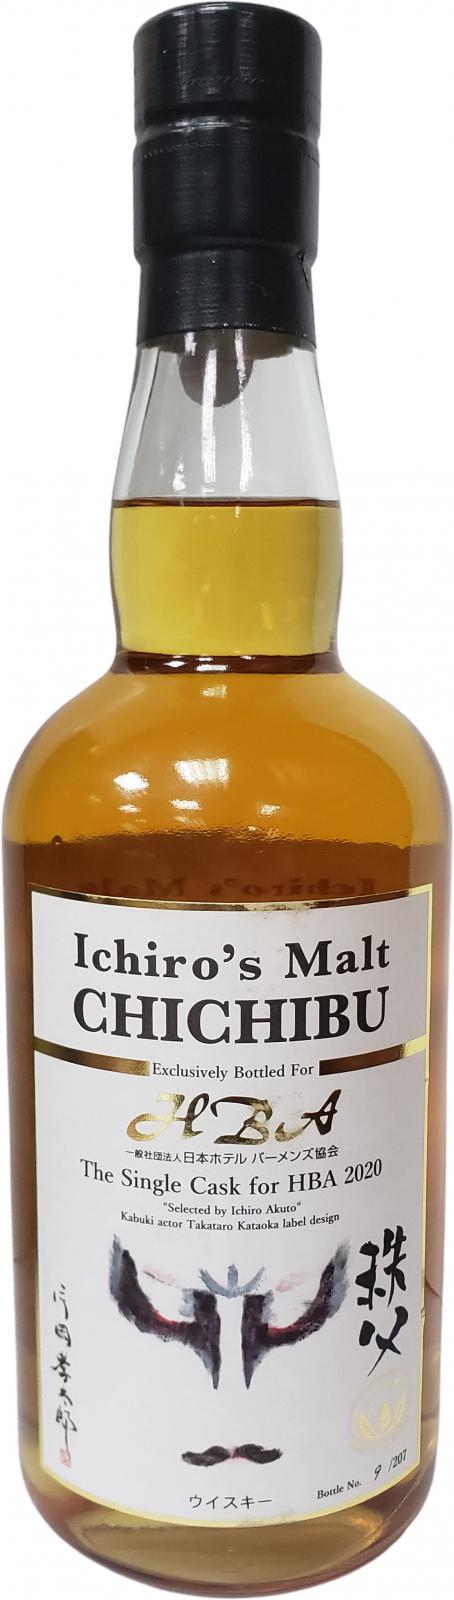 Chichibu 2013 First Fill Bourbon Barrel #2592 HBA 63.9% 700ml